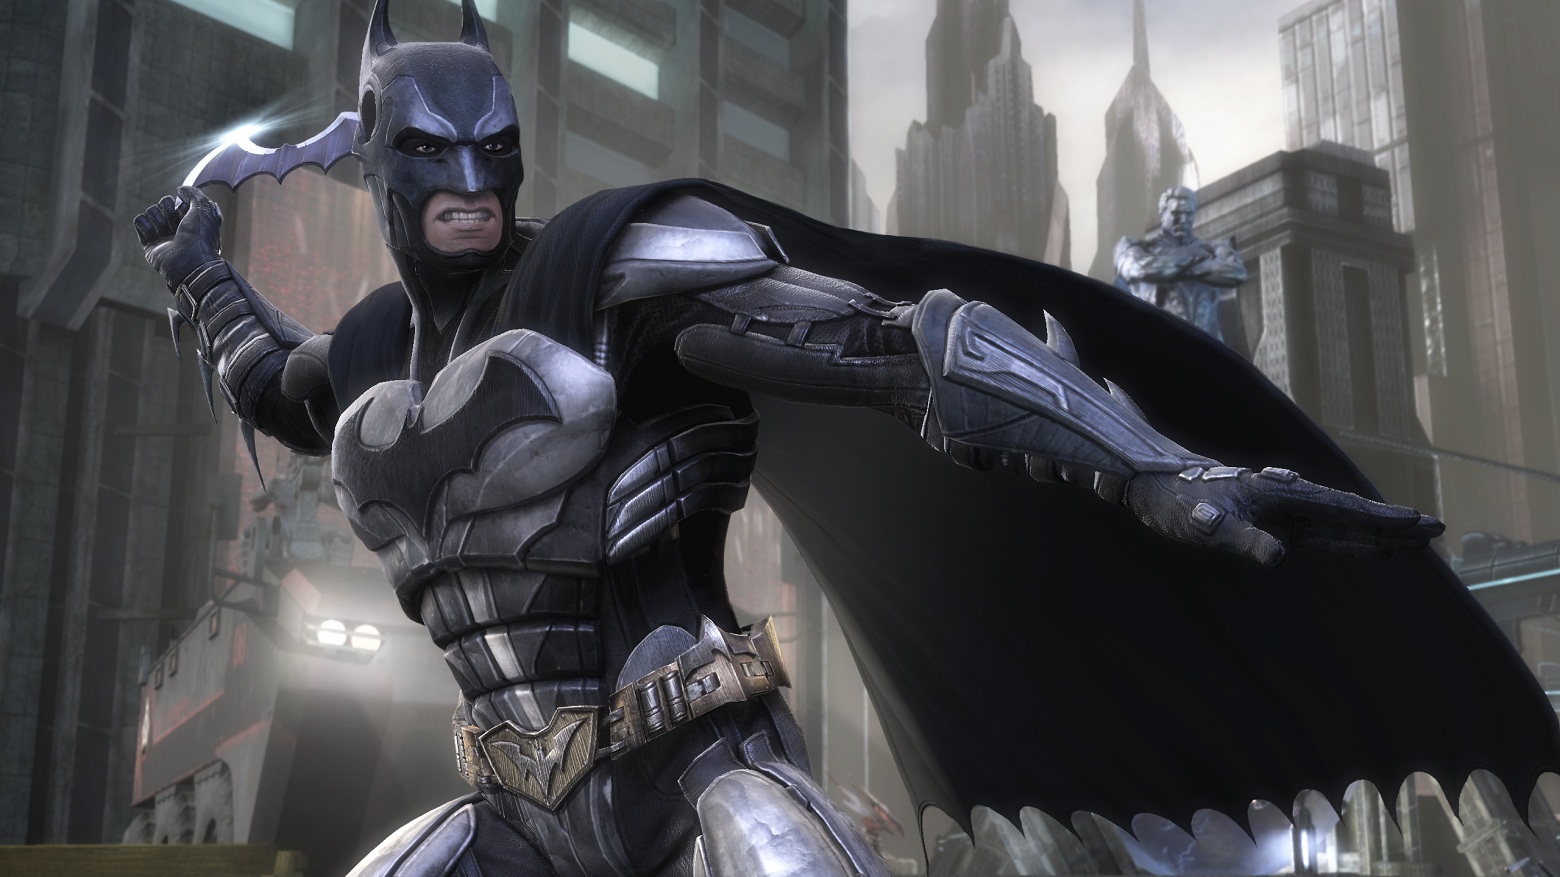 Batman Injustice | 2 Shots of Geek